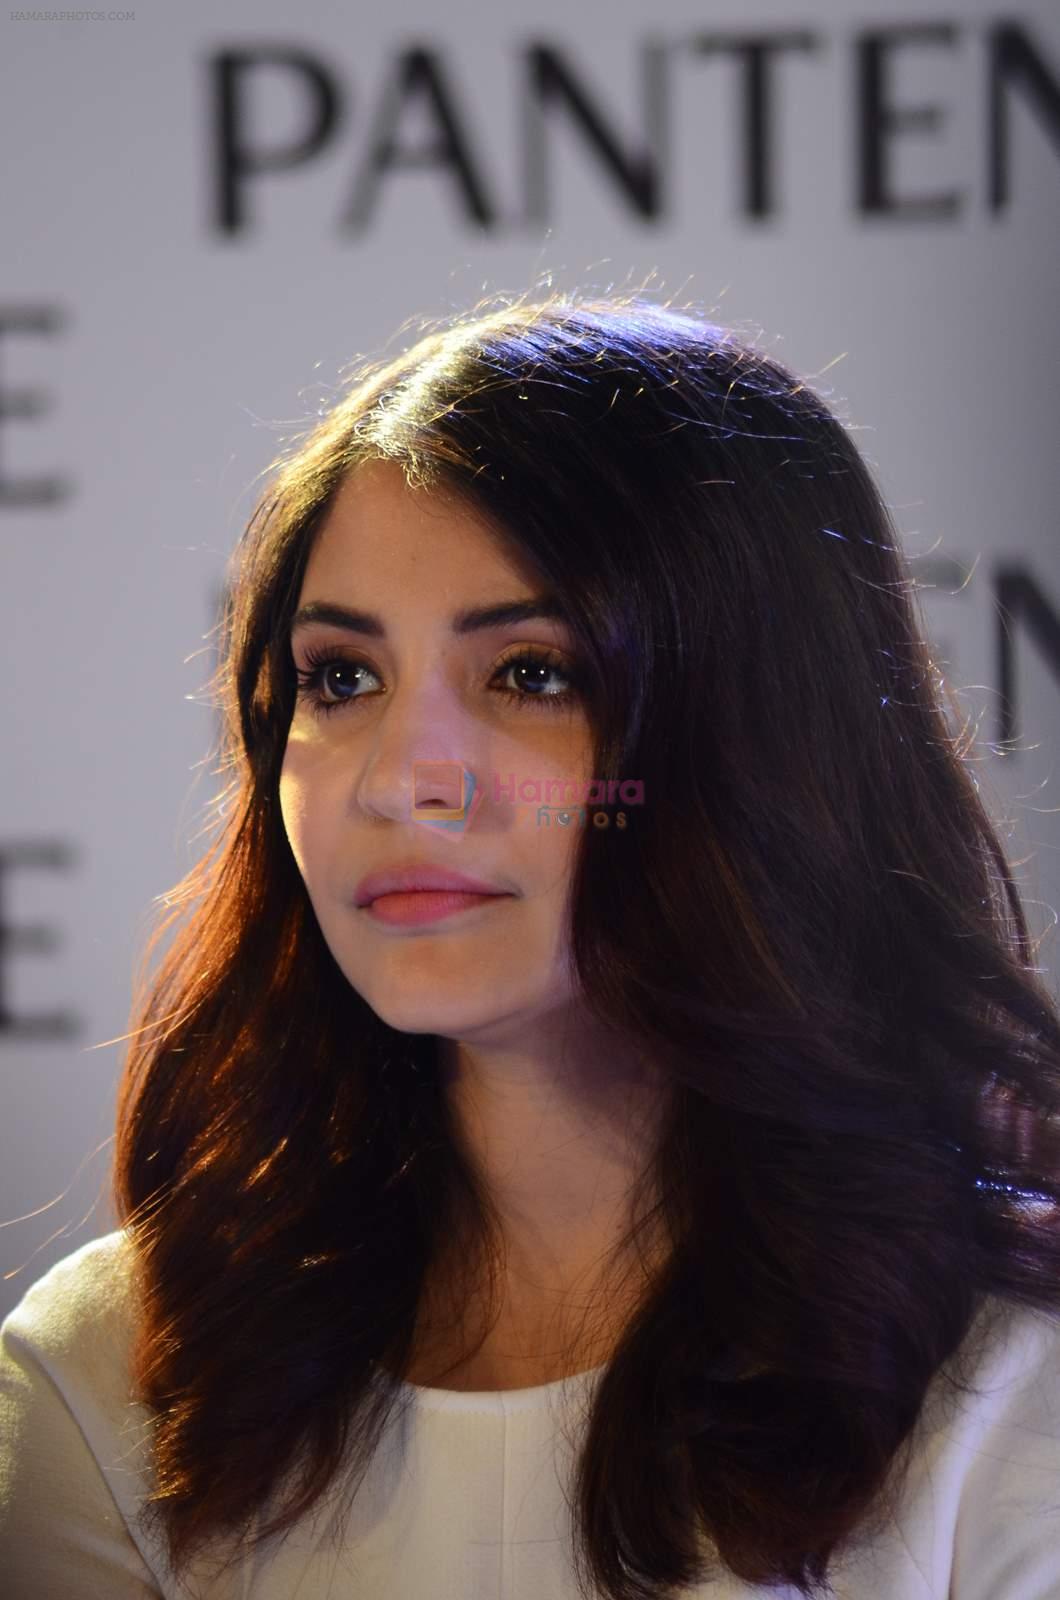 Anushka Sharma becomes the new Brand Ambassador for Pantene on 29th July 2015